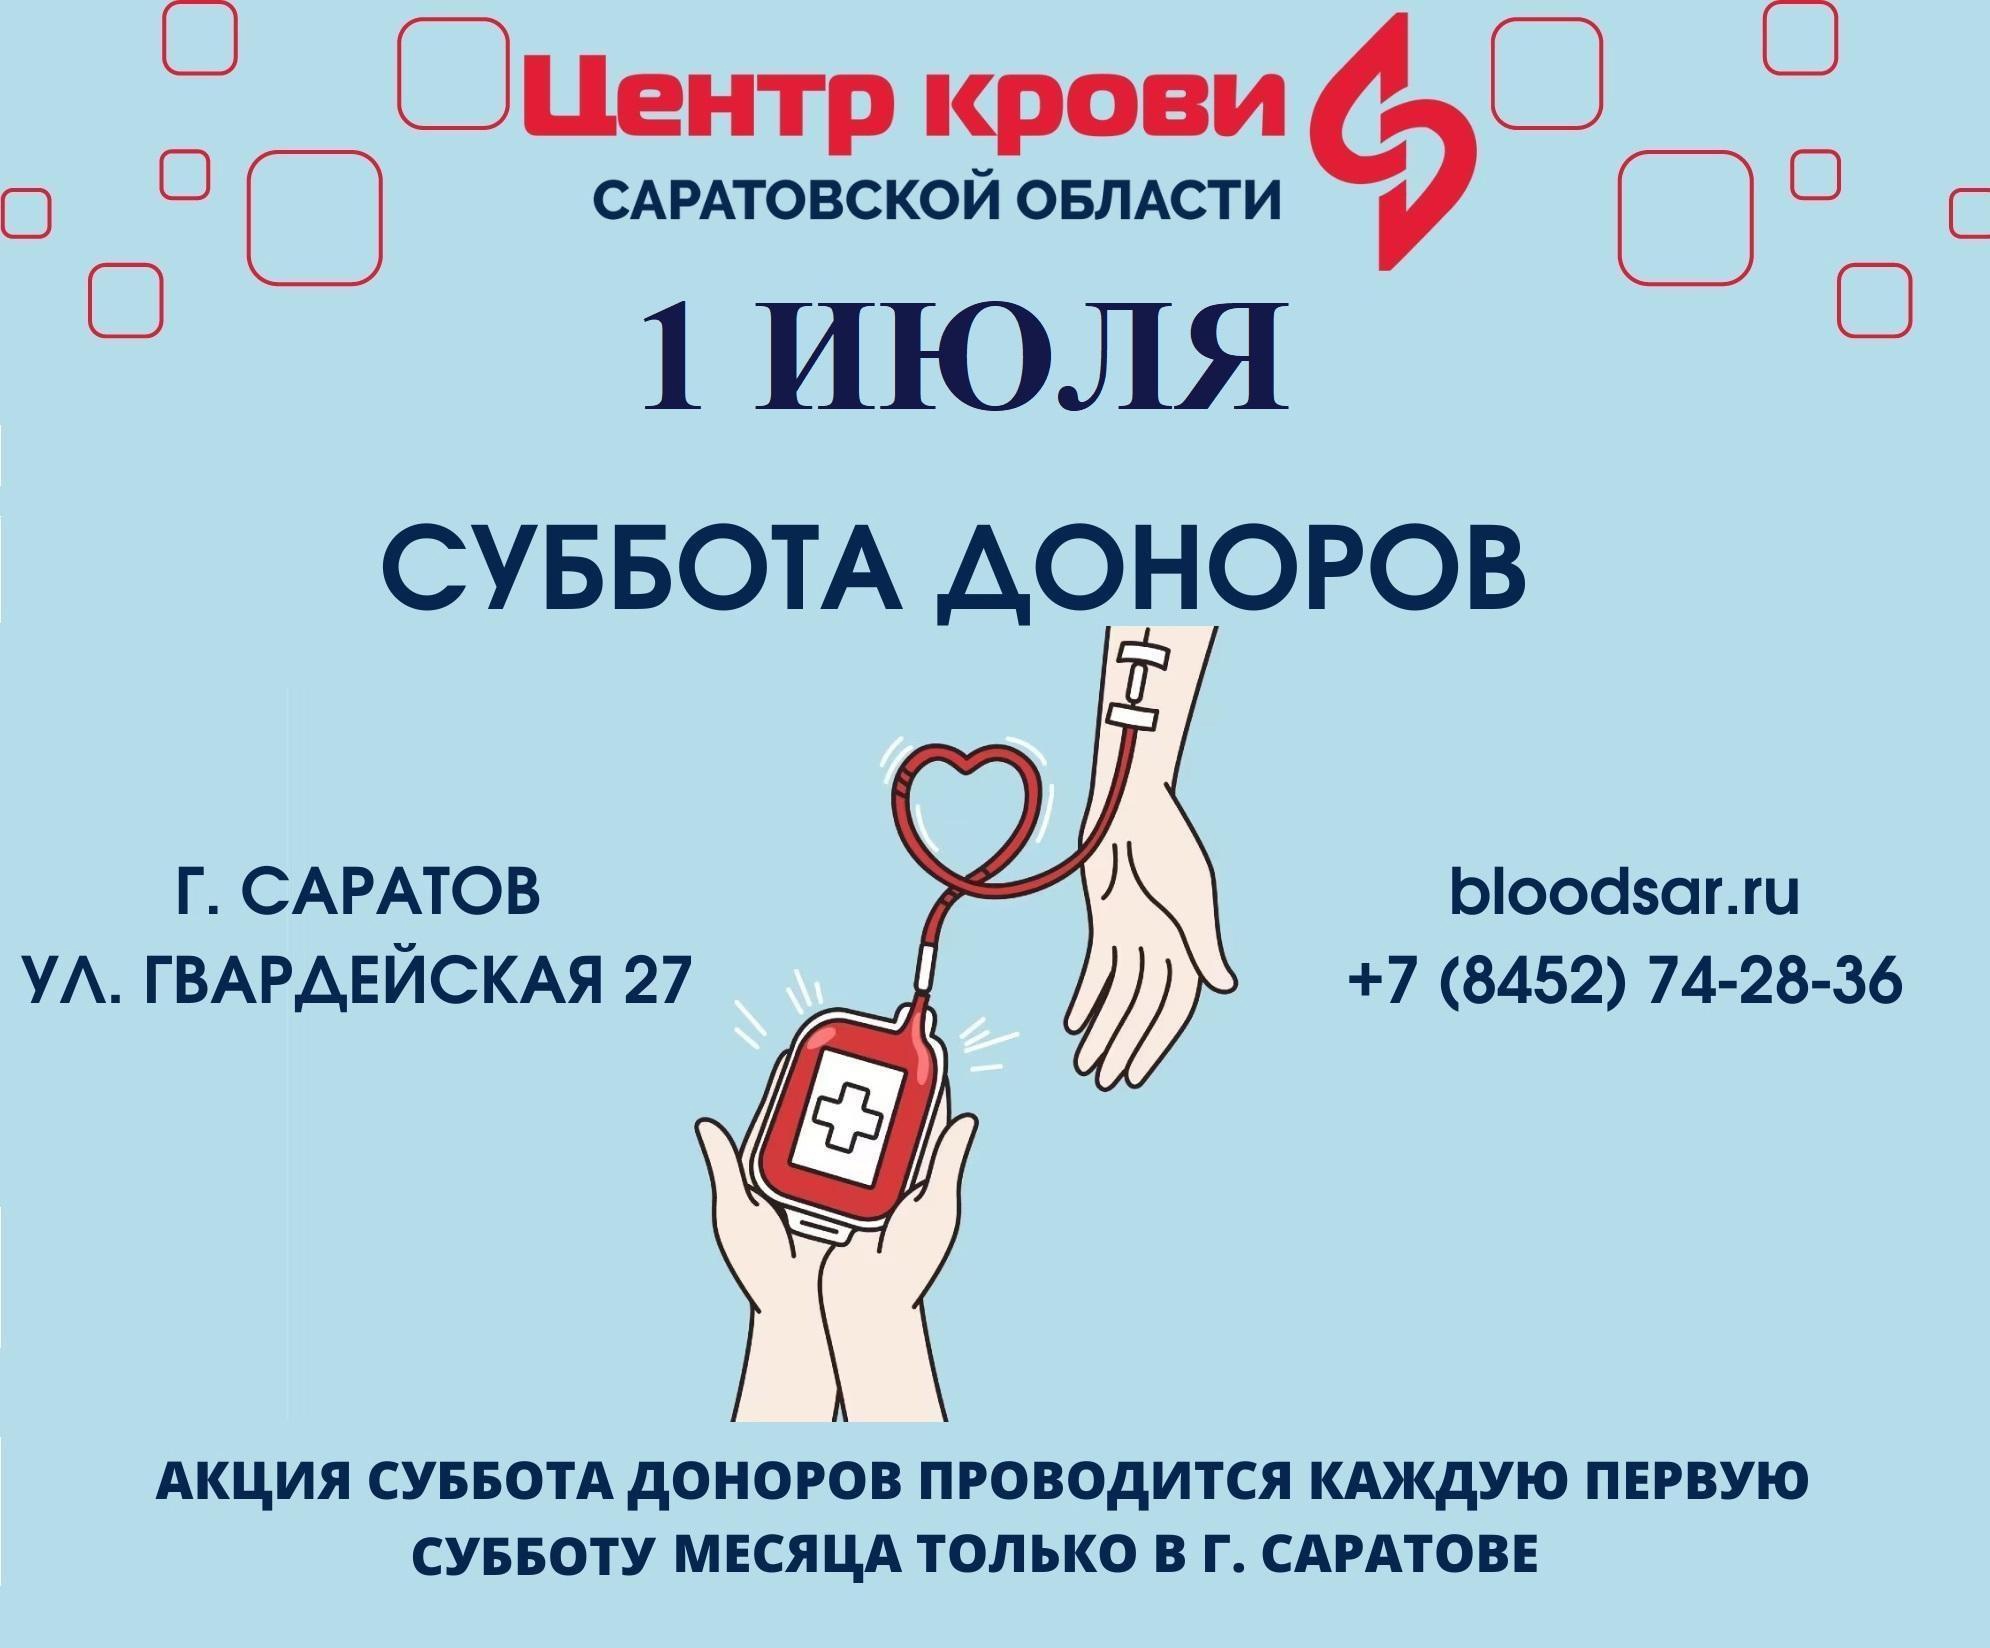 Где найти донора. Донорство крови. Донорский центр Саратов. Суббота донора картинки. Плакат донорская суббота.